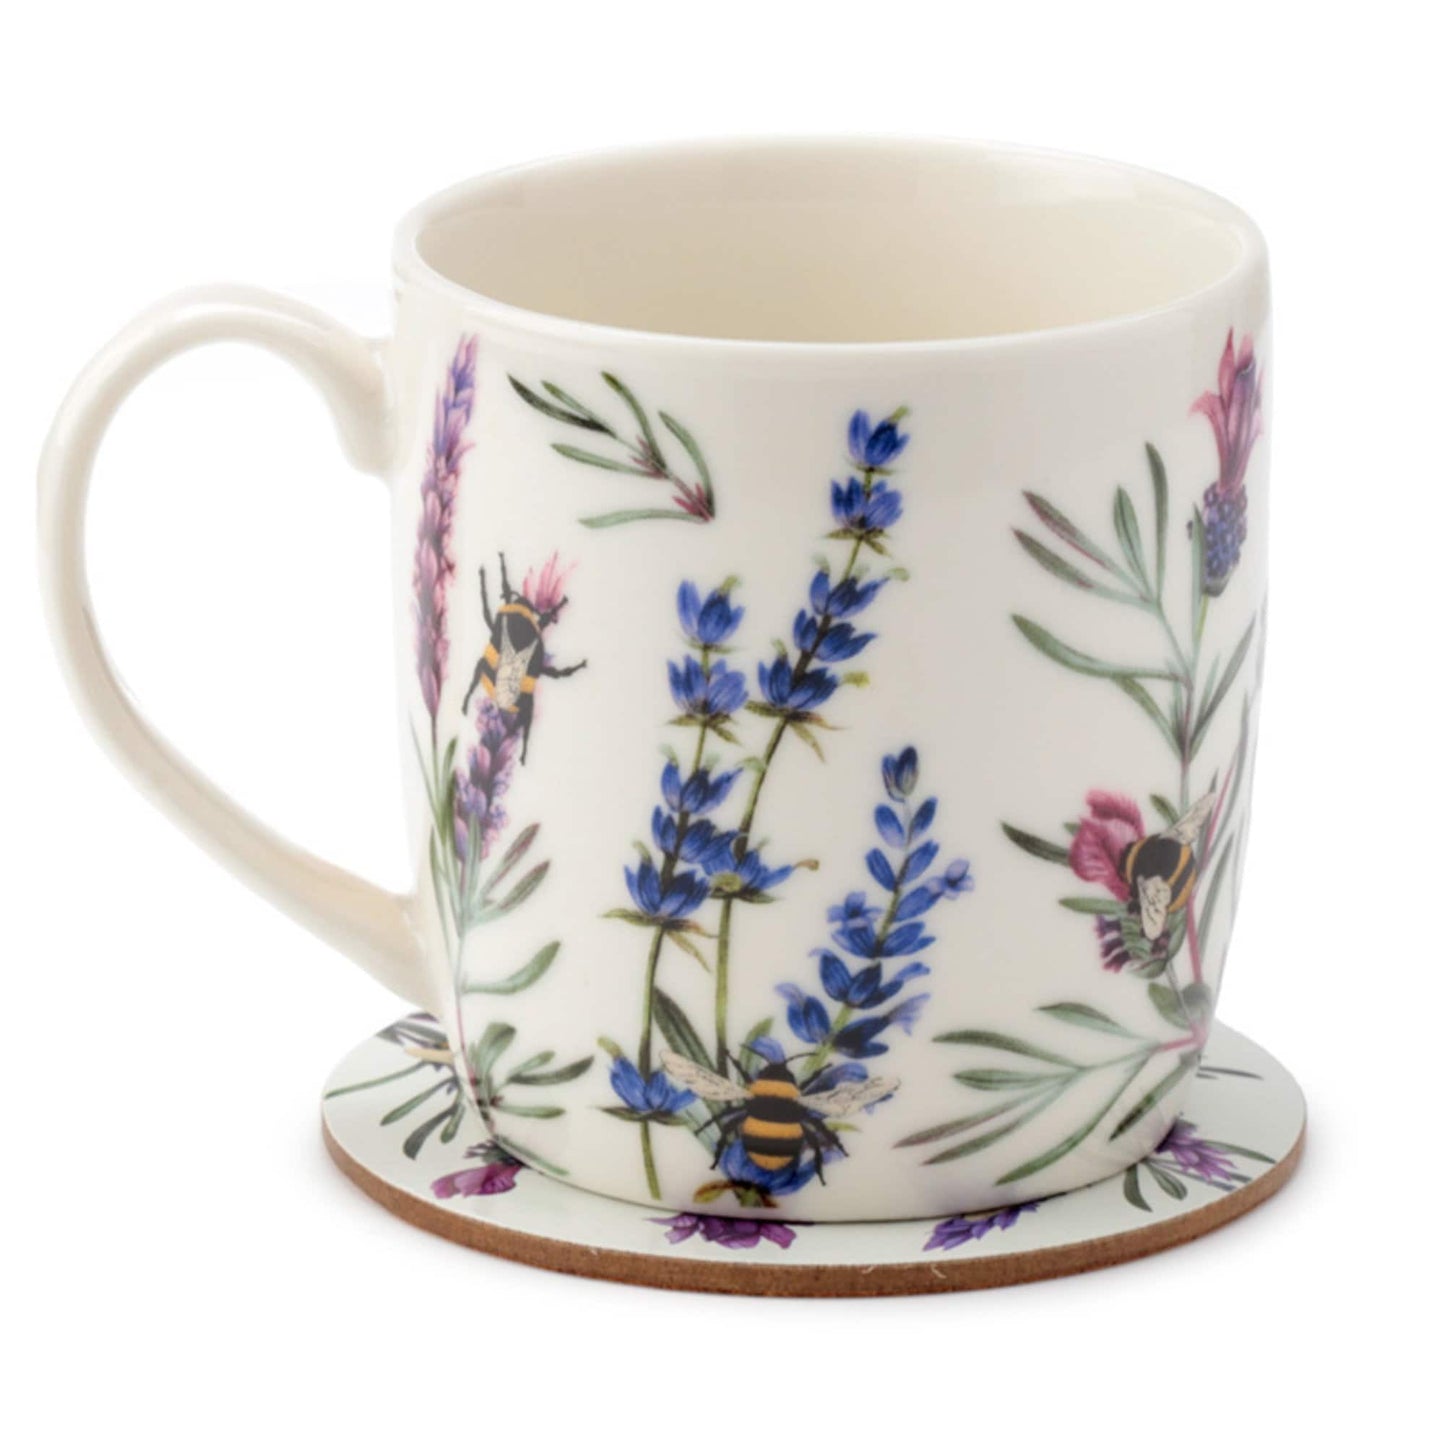 Flowers And Bees Design Porcelain Mug And Coaster Set